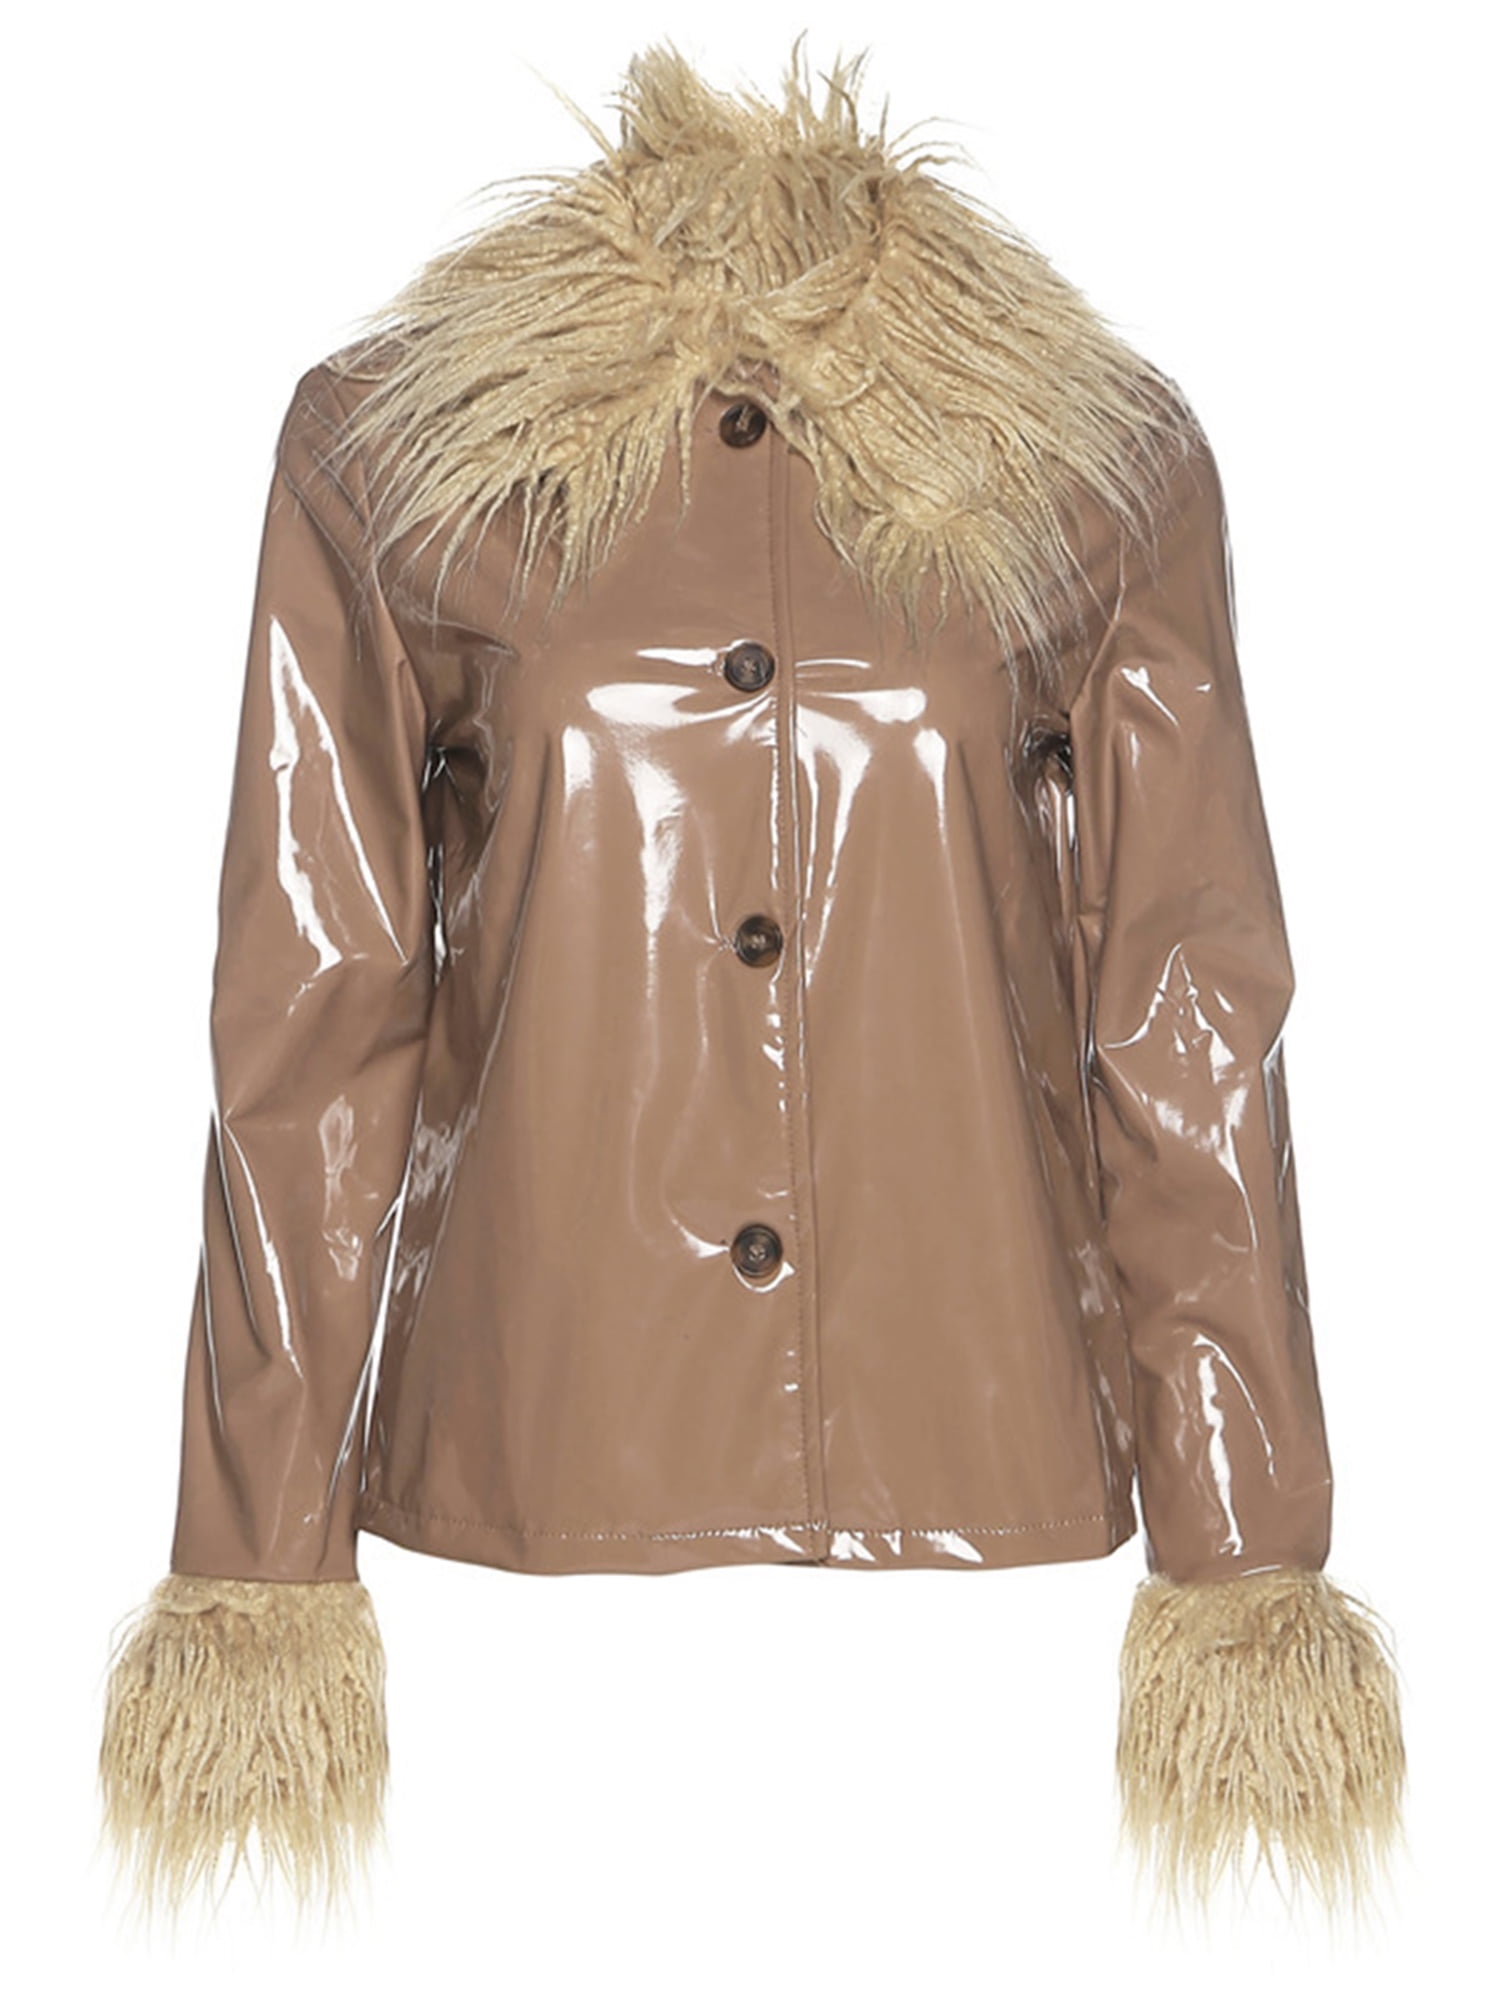 Vintage Leather Jacket Medium Crop Removable Faux Fur Collar Shoulder Pads